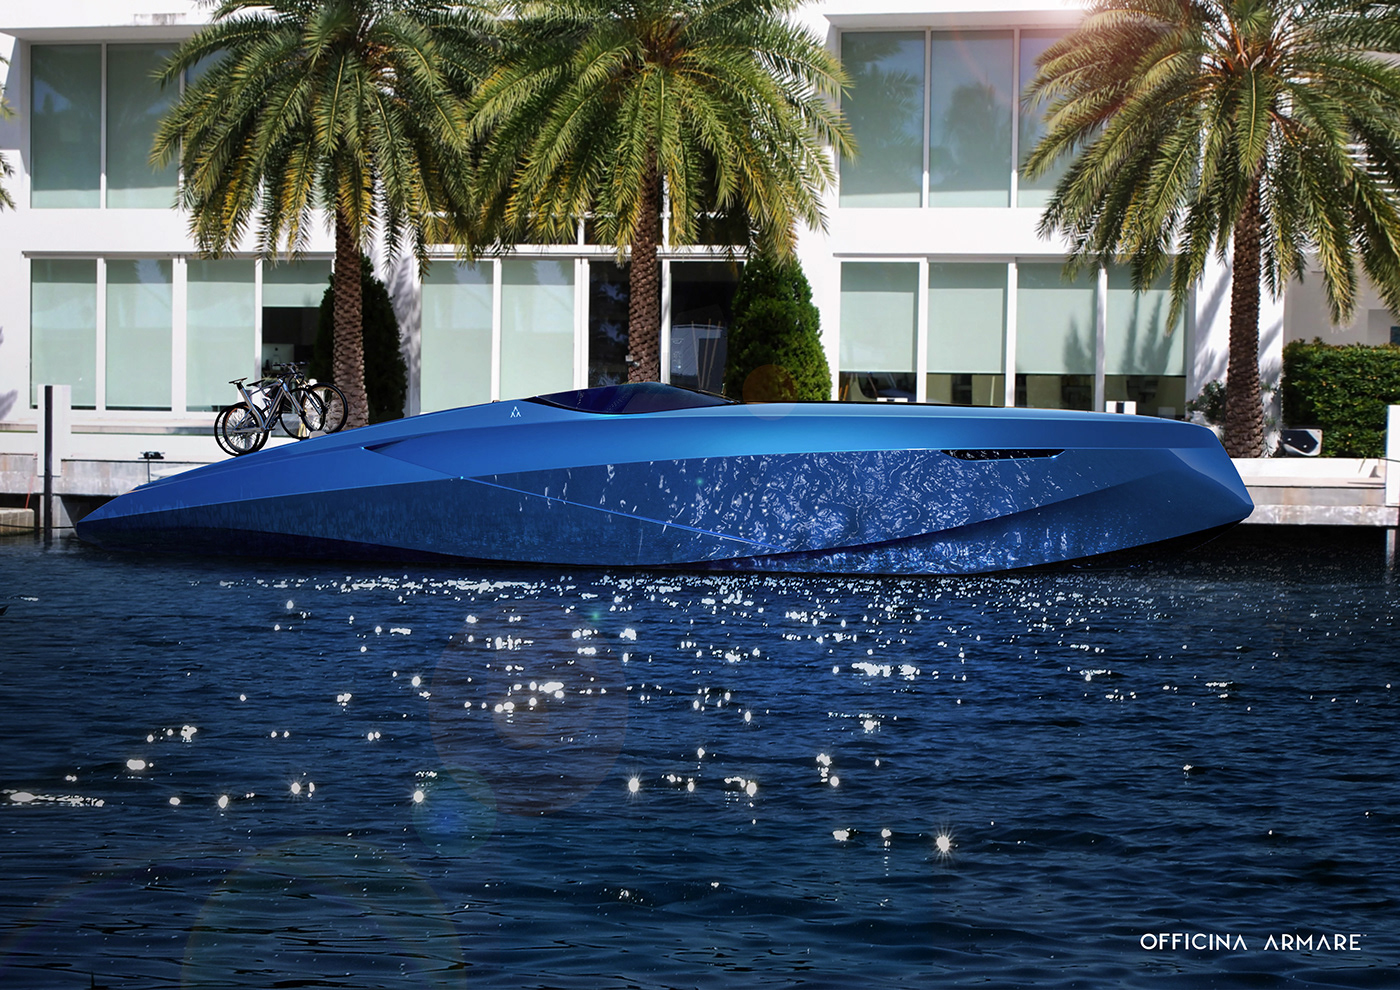 a43 a43 speed boat a43 superleggera armagan cakir armare officina armare officinaarmare Power Boat yacht concept Yacht Design